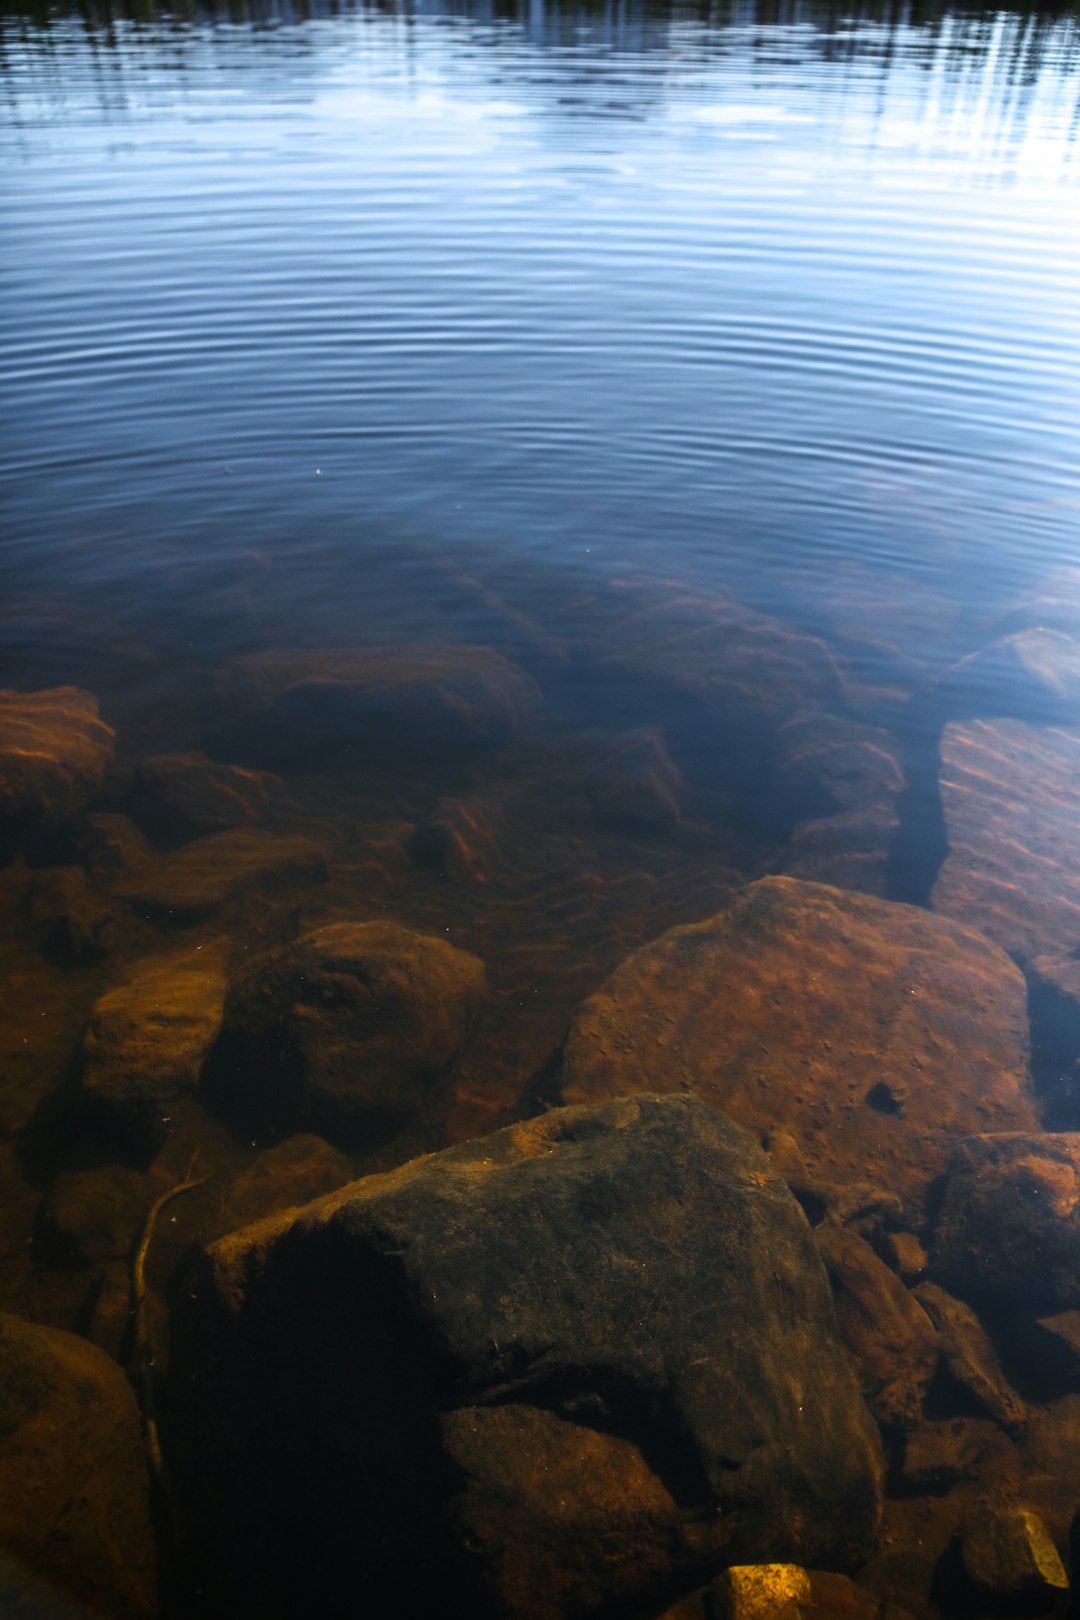 brown rocks beside body of water